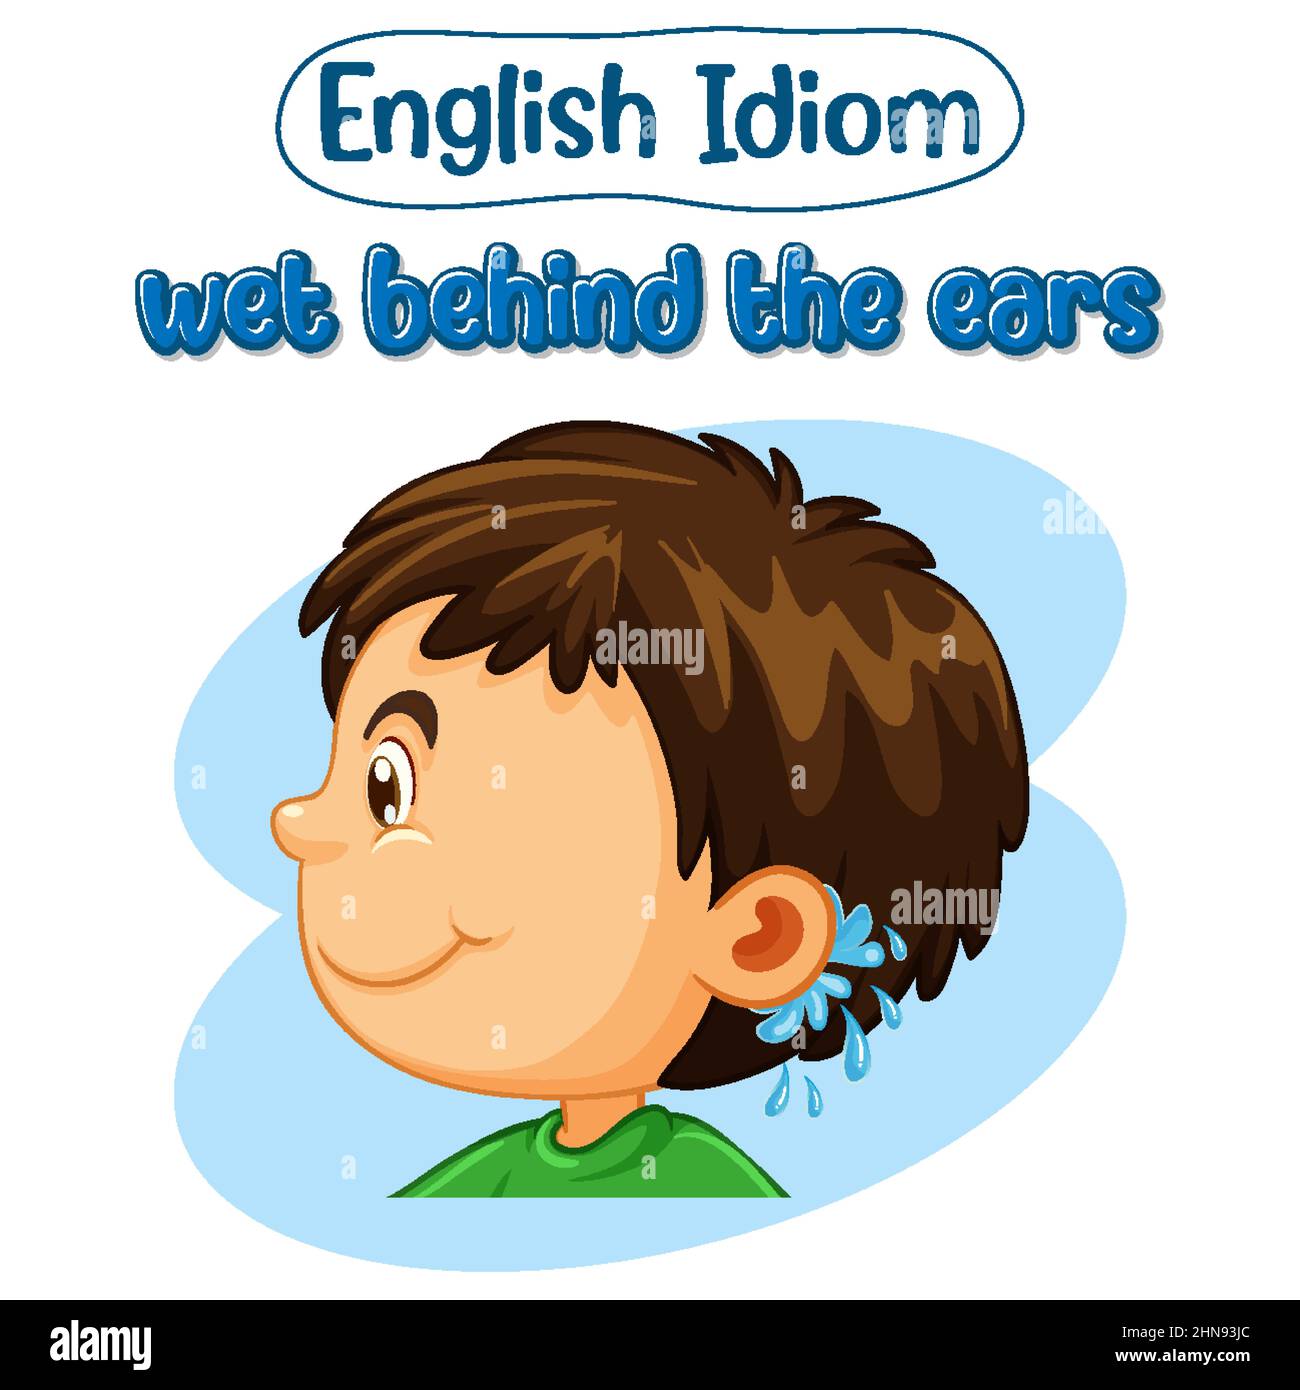 Expressões em Inglês O que Significa To Play it By Ear 